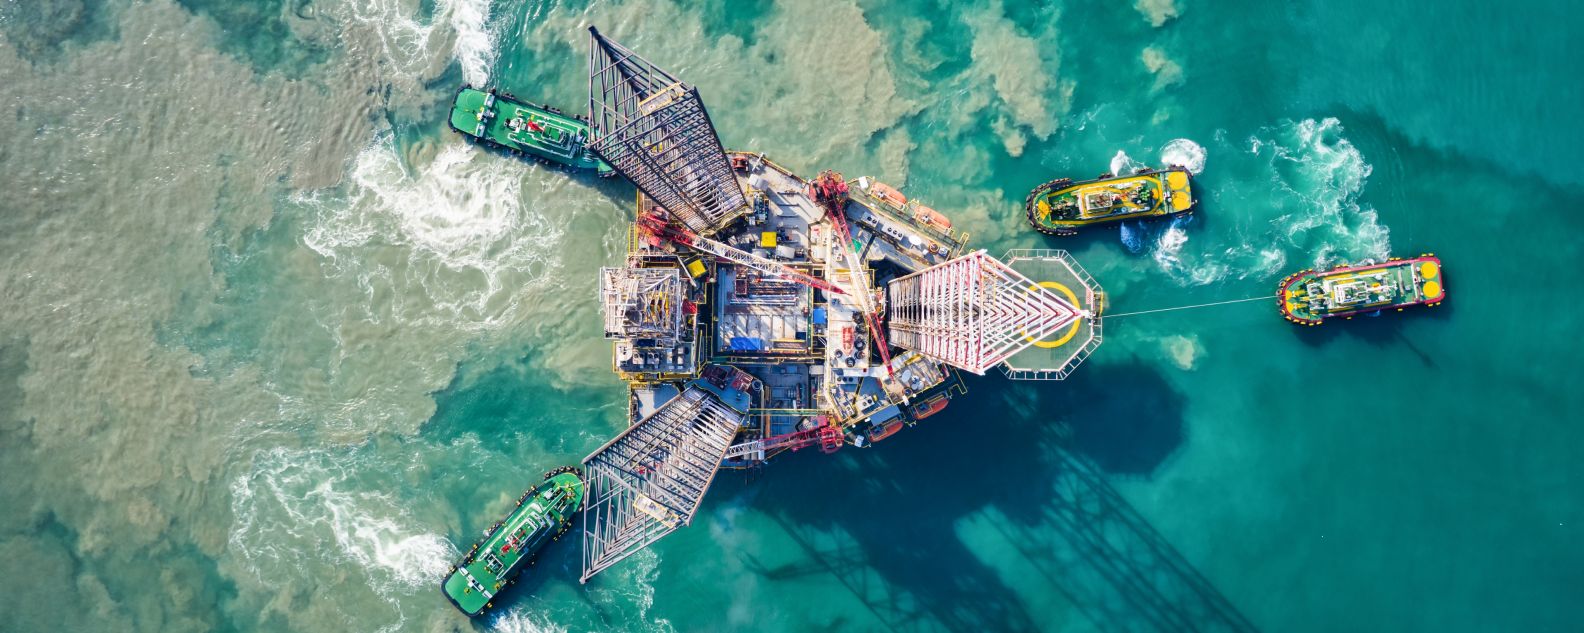 Aerial view of oil platform